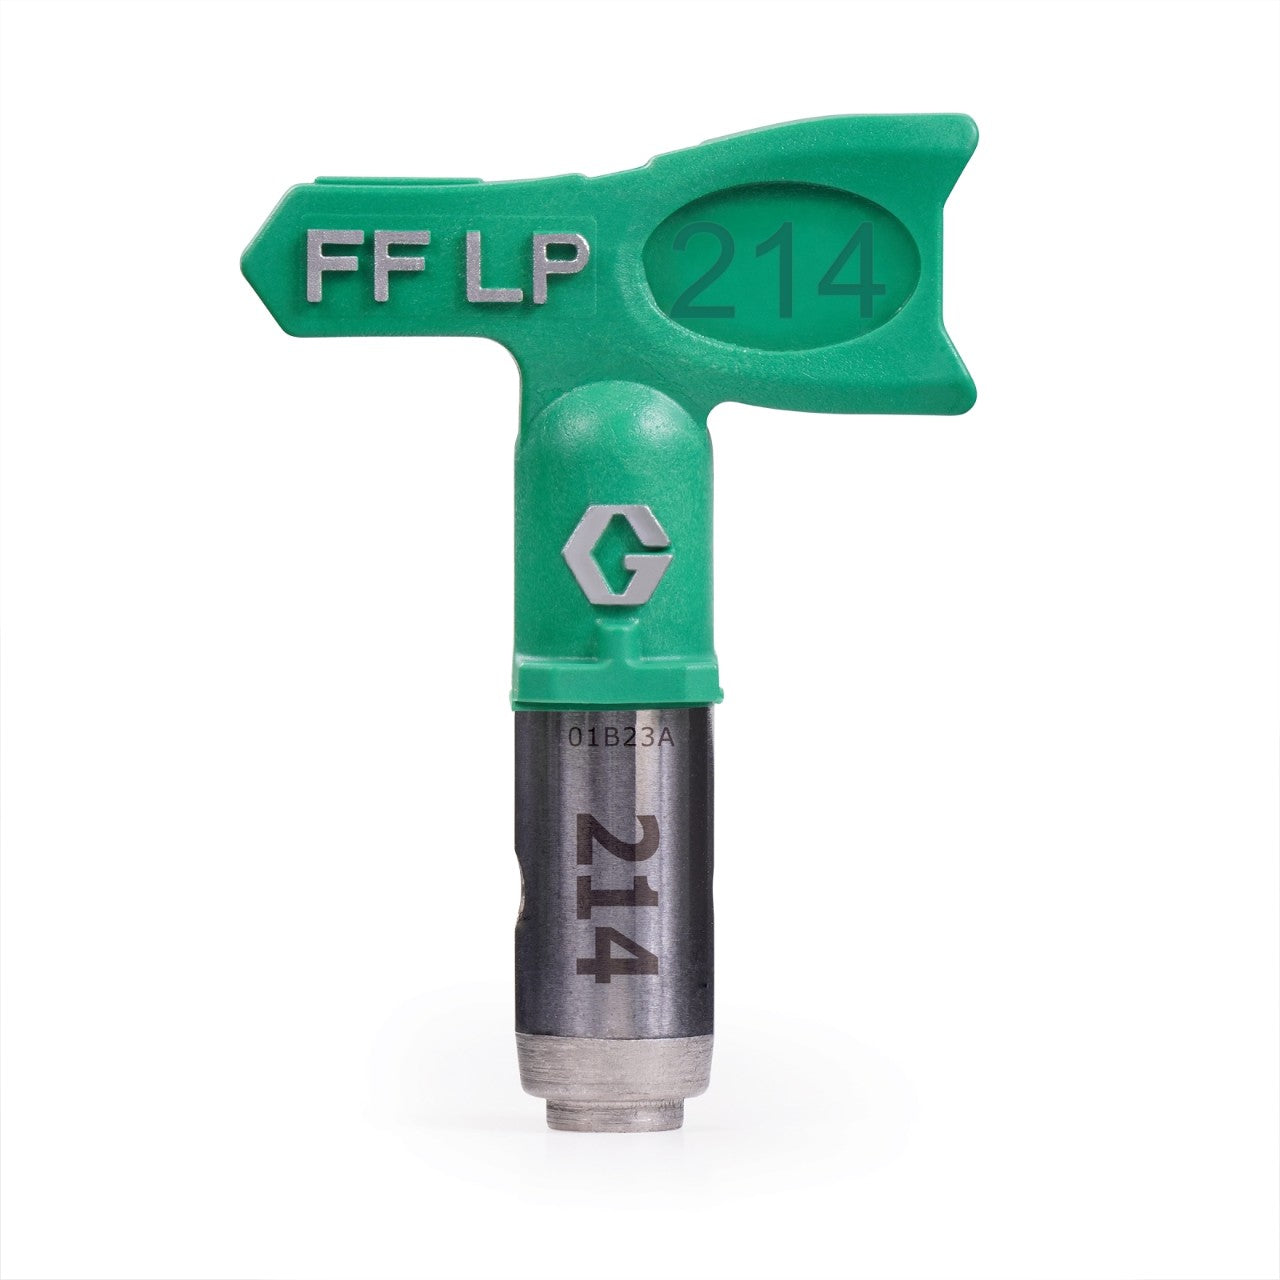 Graco FFLP-214 Tip